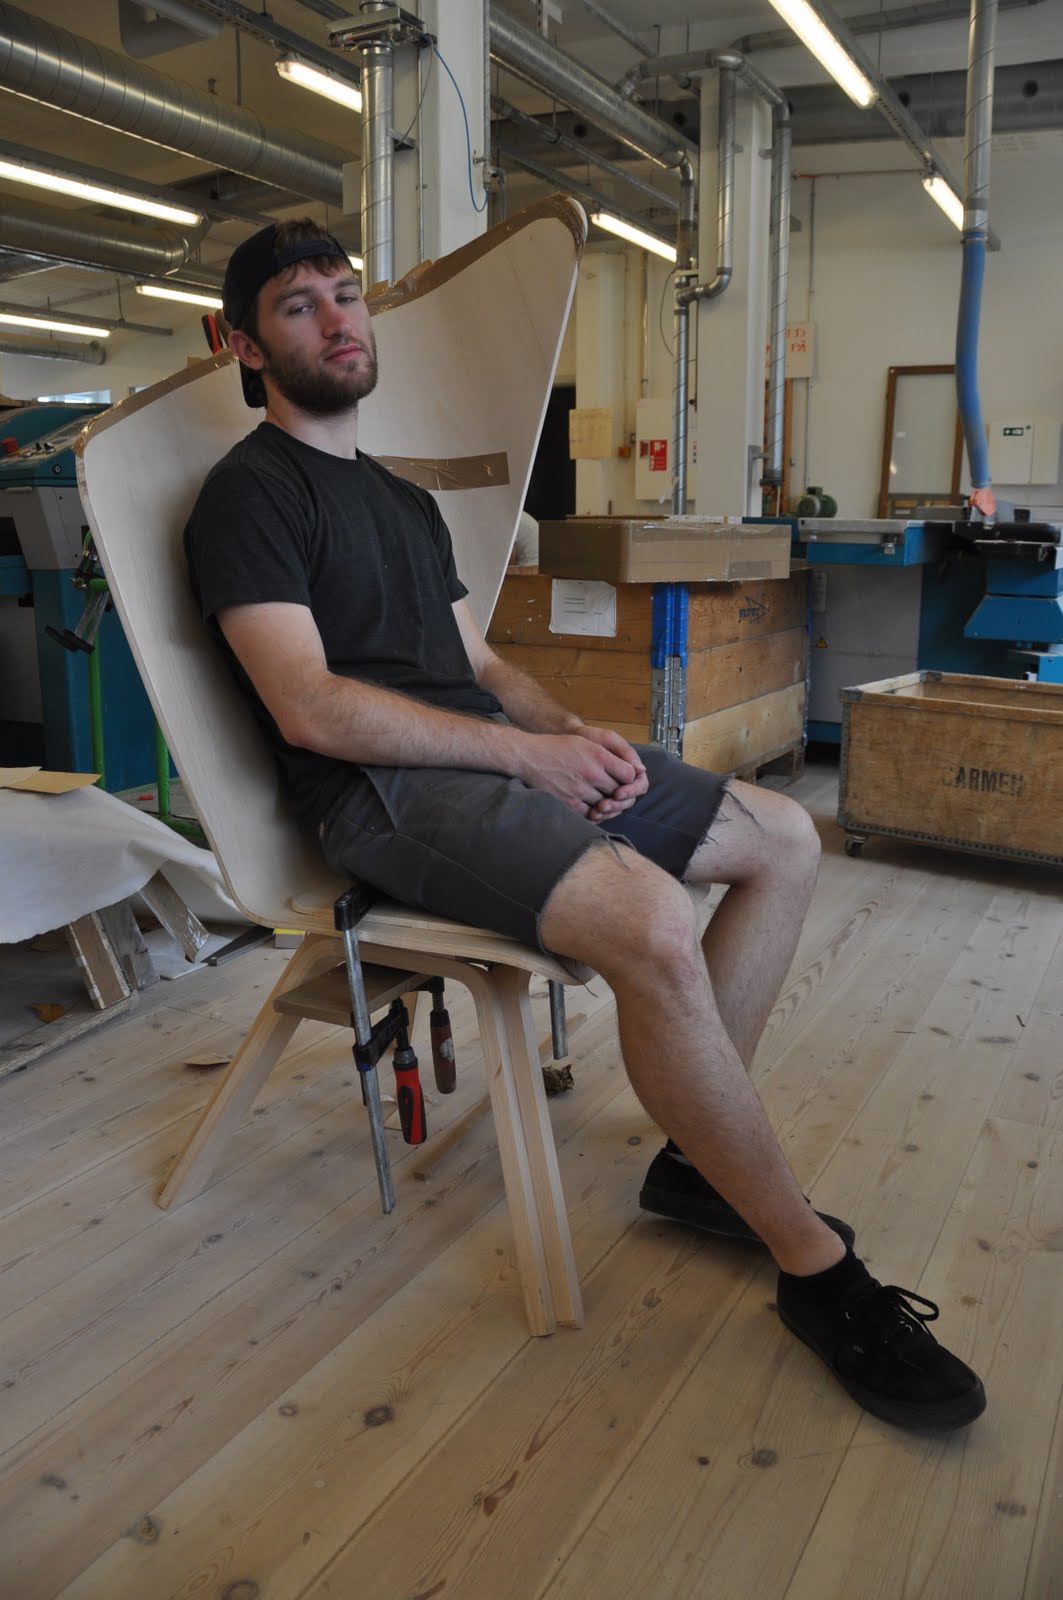 Brunette in Scandinavia: People sitting in chairs